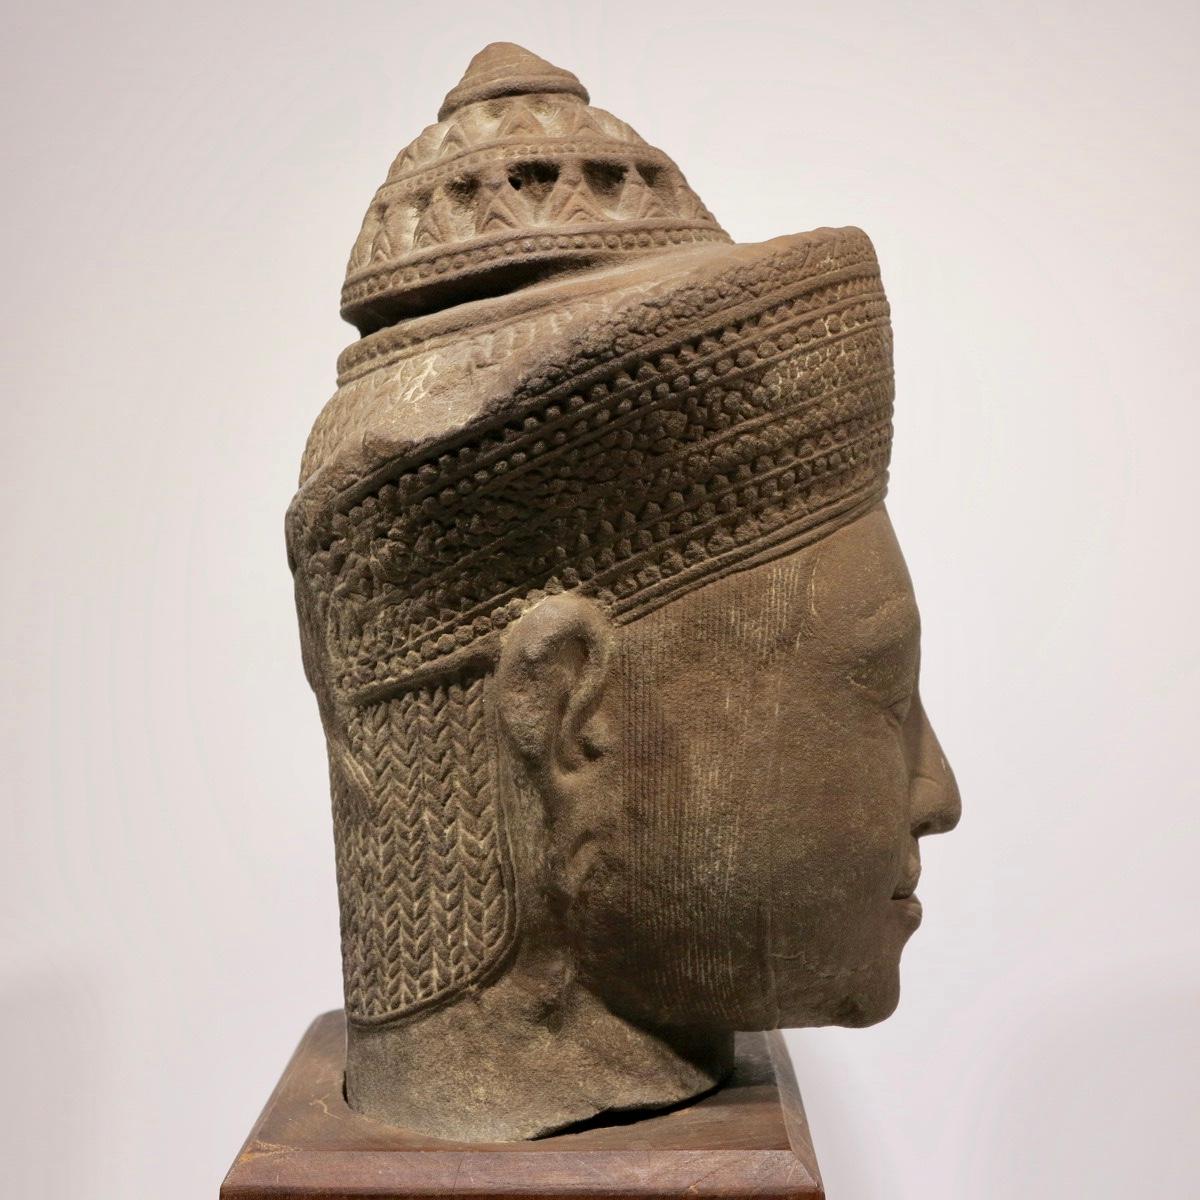 Head of Vishnu, Khmer, Cambodian bust sculpture 2